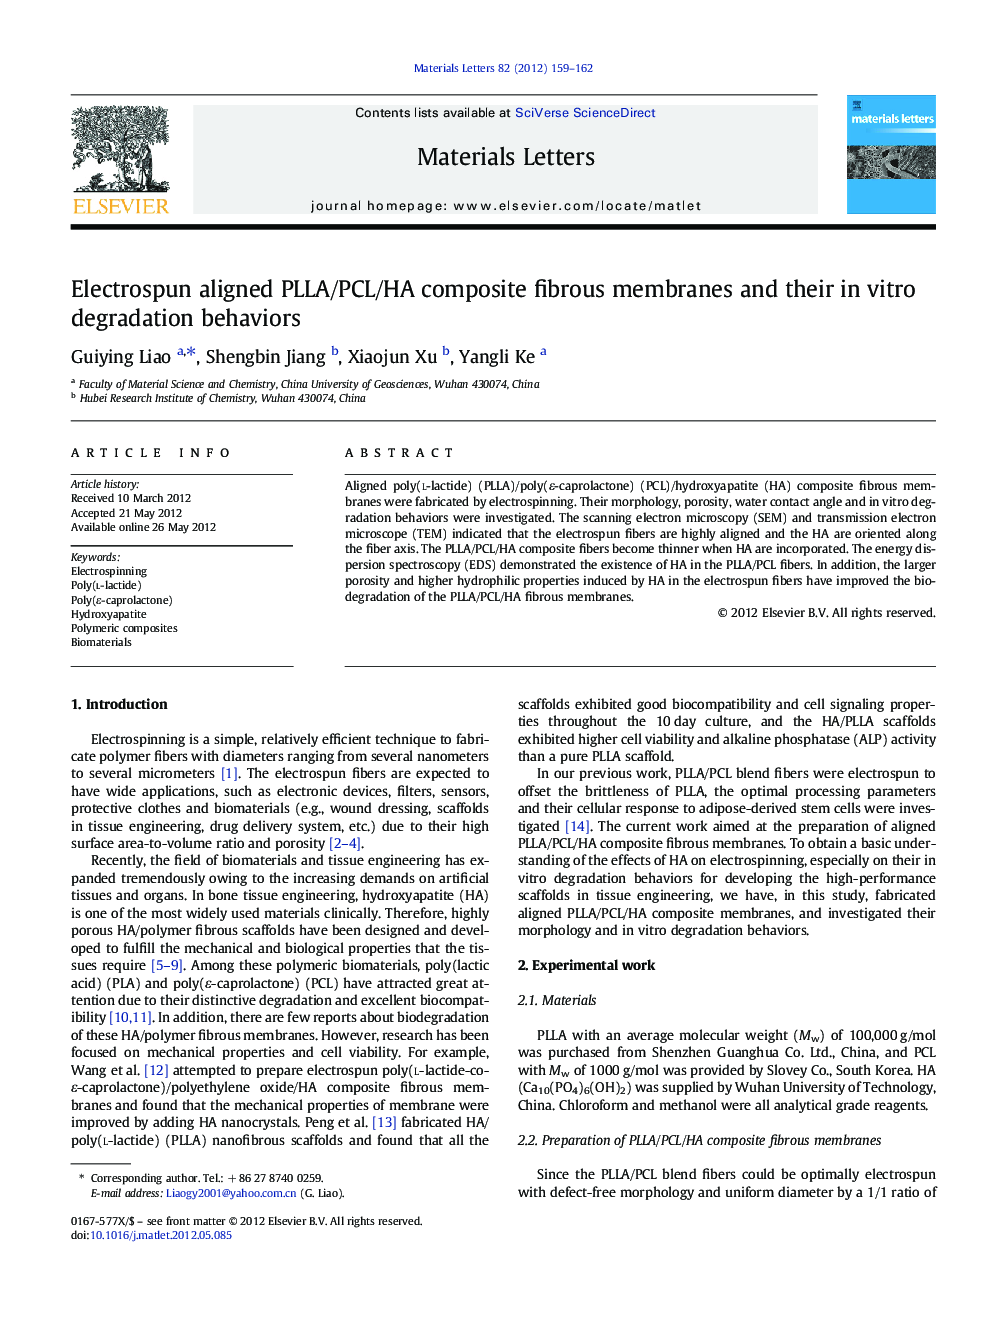 Electrospun aligned PLLA/PCL/HA composite fibrous membranes and their in vitro degradation behaviors